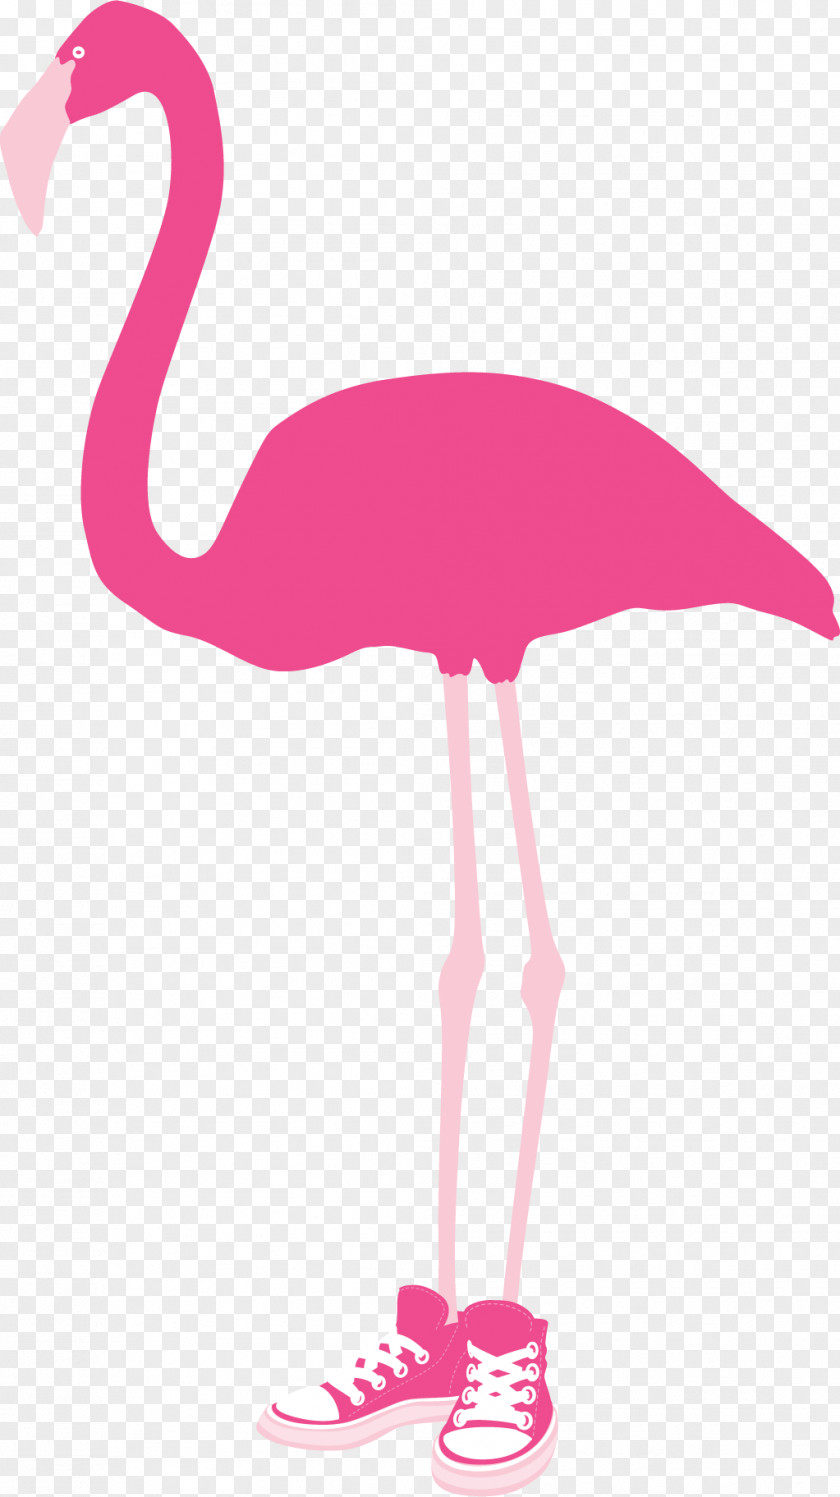 Flamingo Apopka Mount Dora Florida Hospital Waterman Tavares PNG